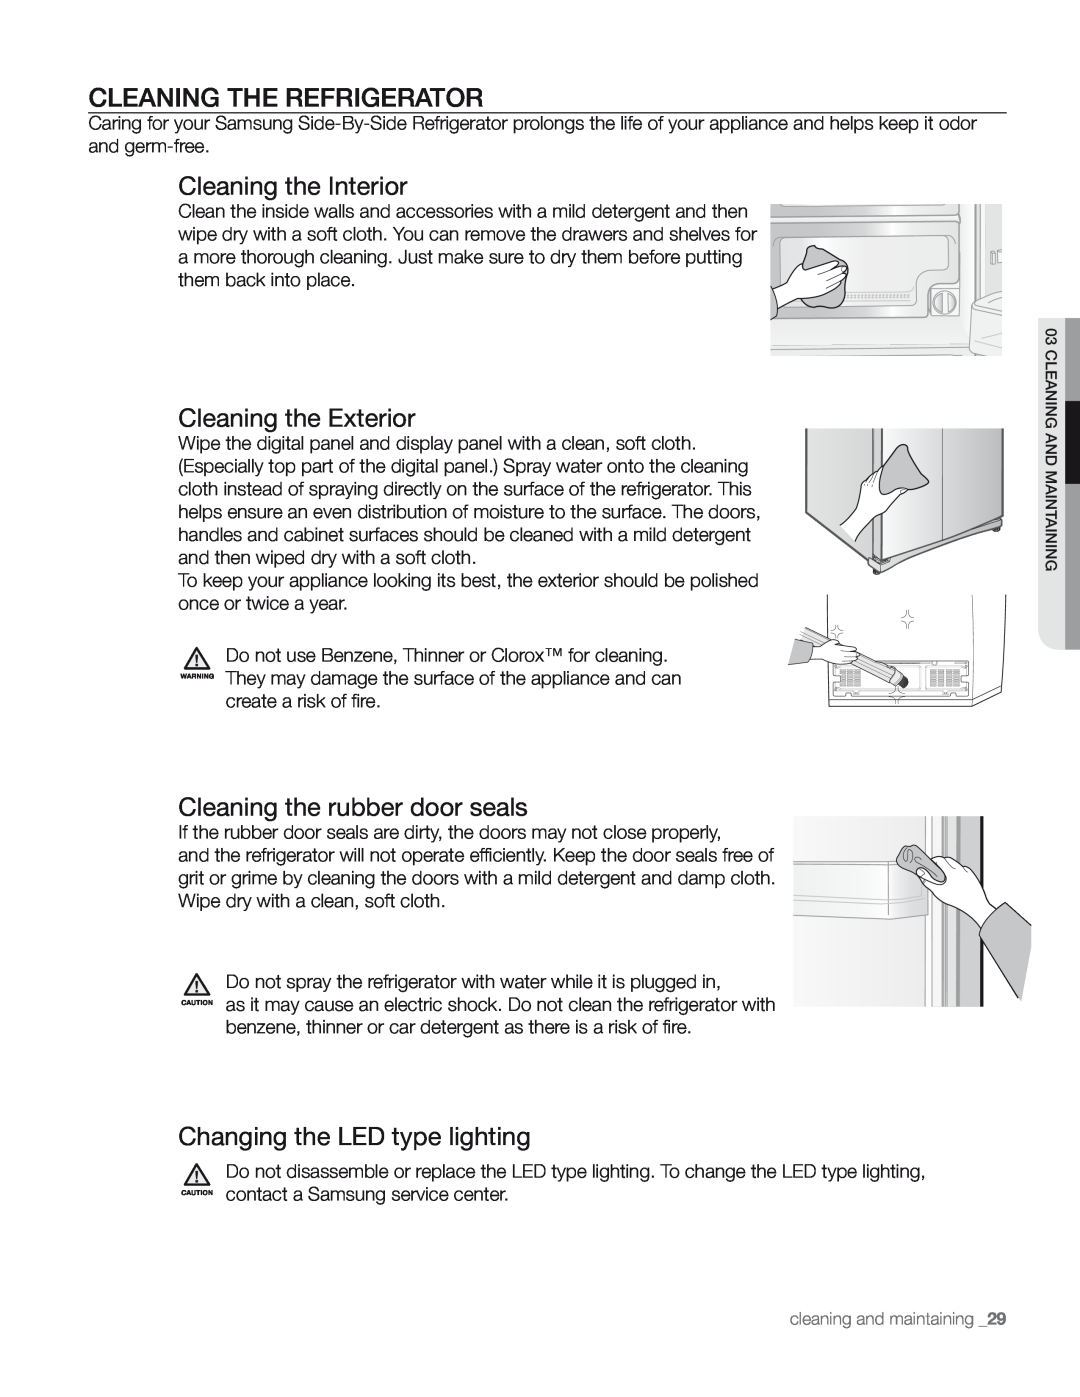 Samsung DA68-01890M user manual Cleaning The Refrigerator, Cleaning the Interior, Cleaning the Exterior 